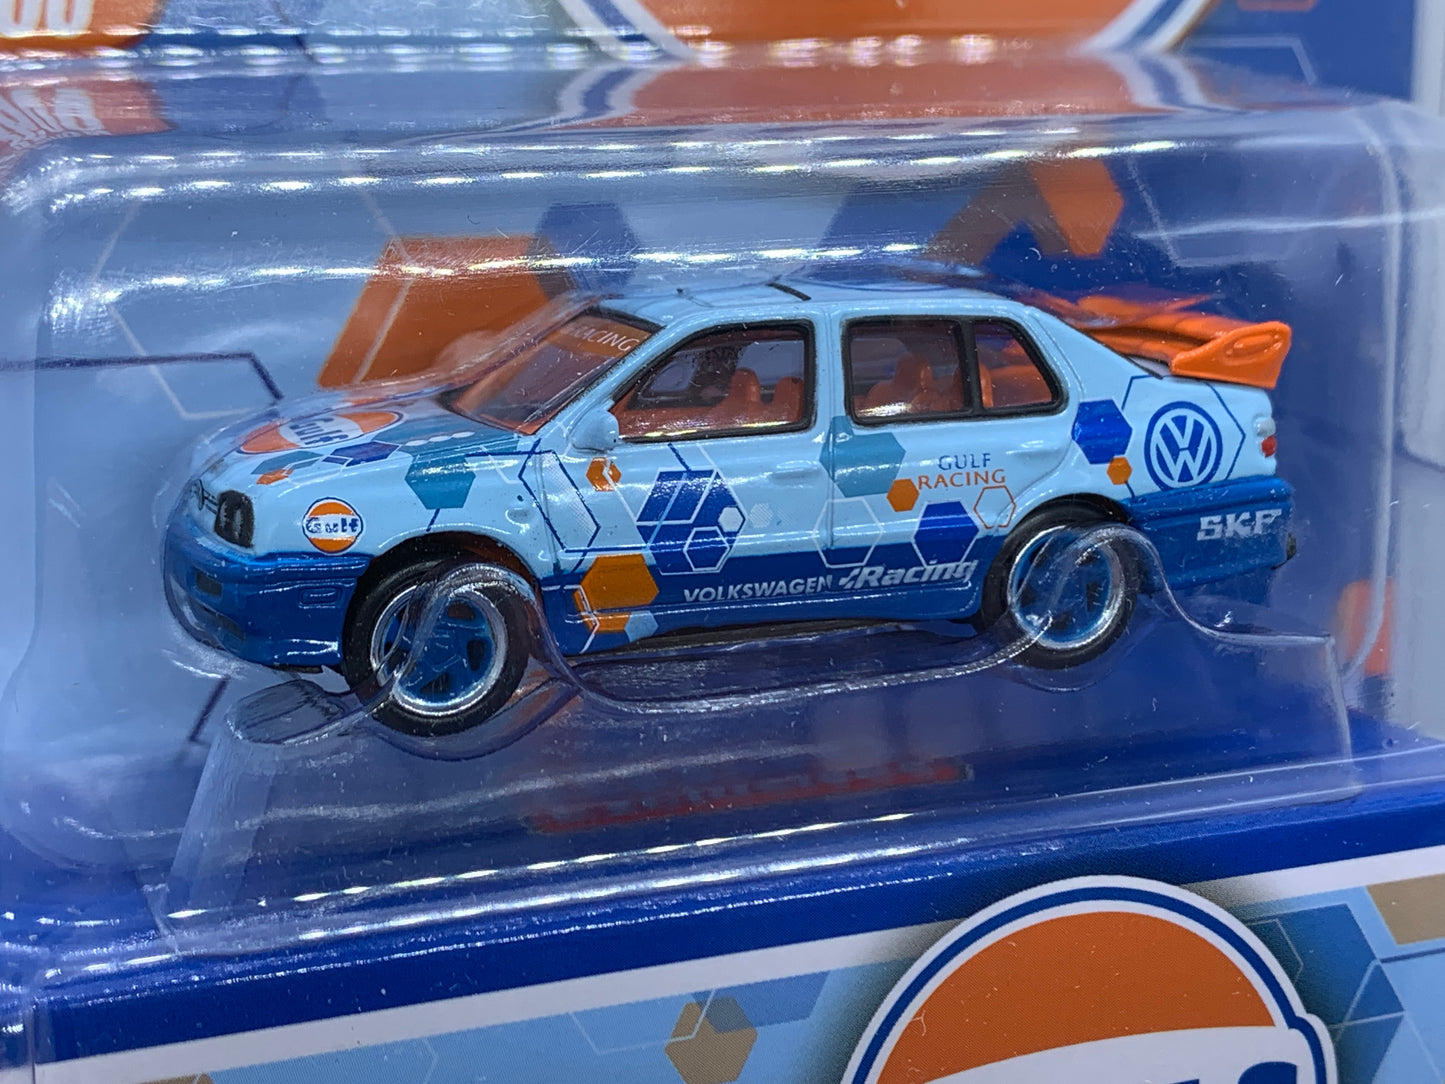 Racing Champions - 1995 Volkswagen Jetta - Gulf Oil